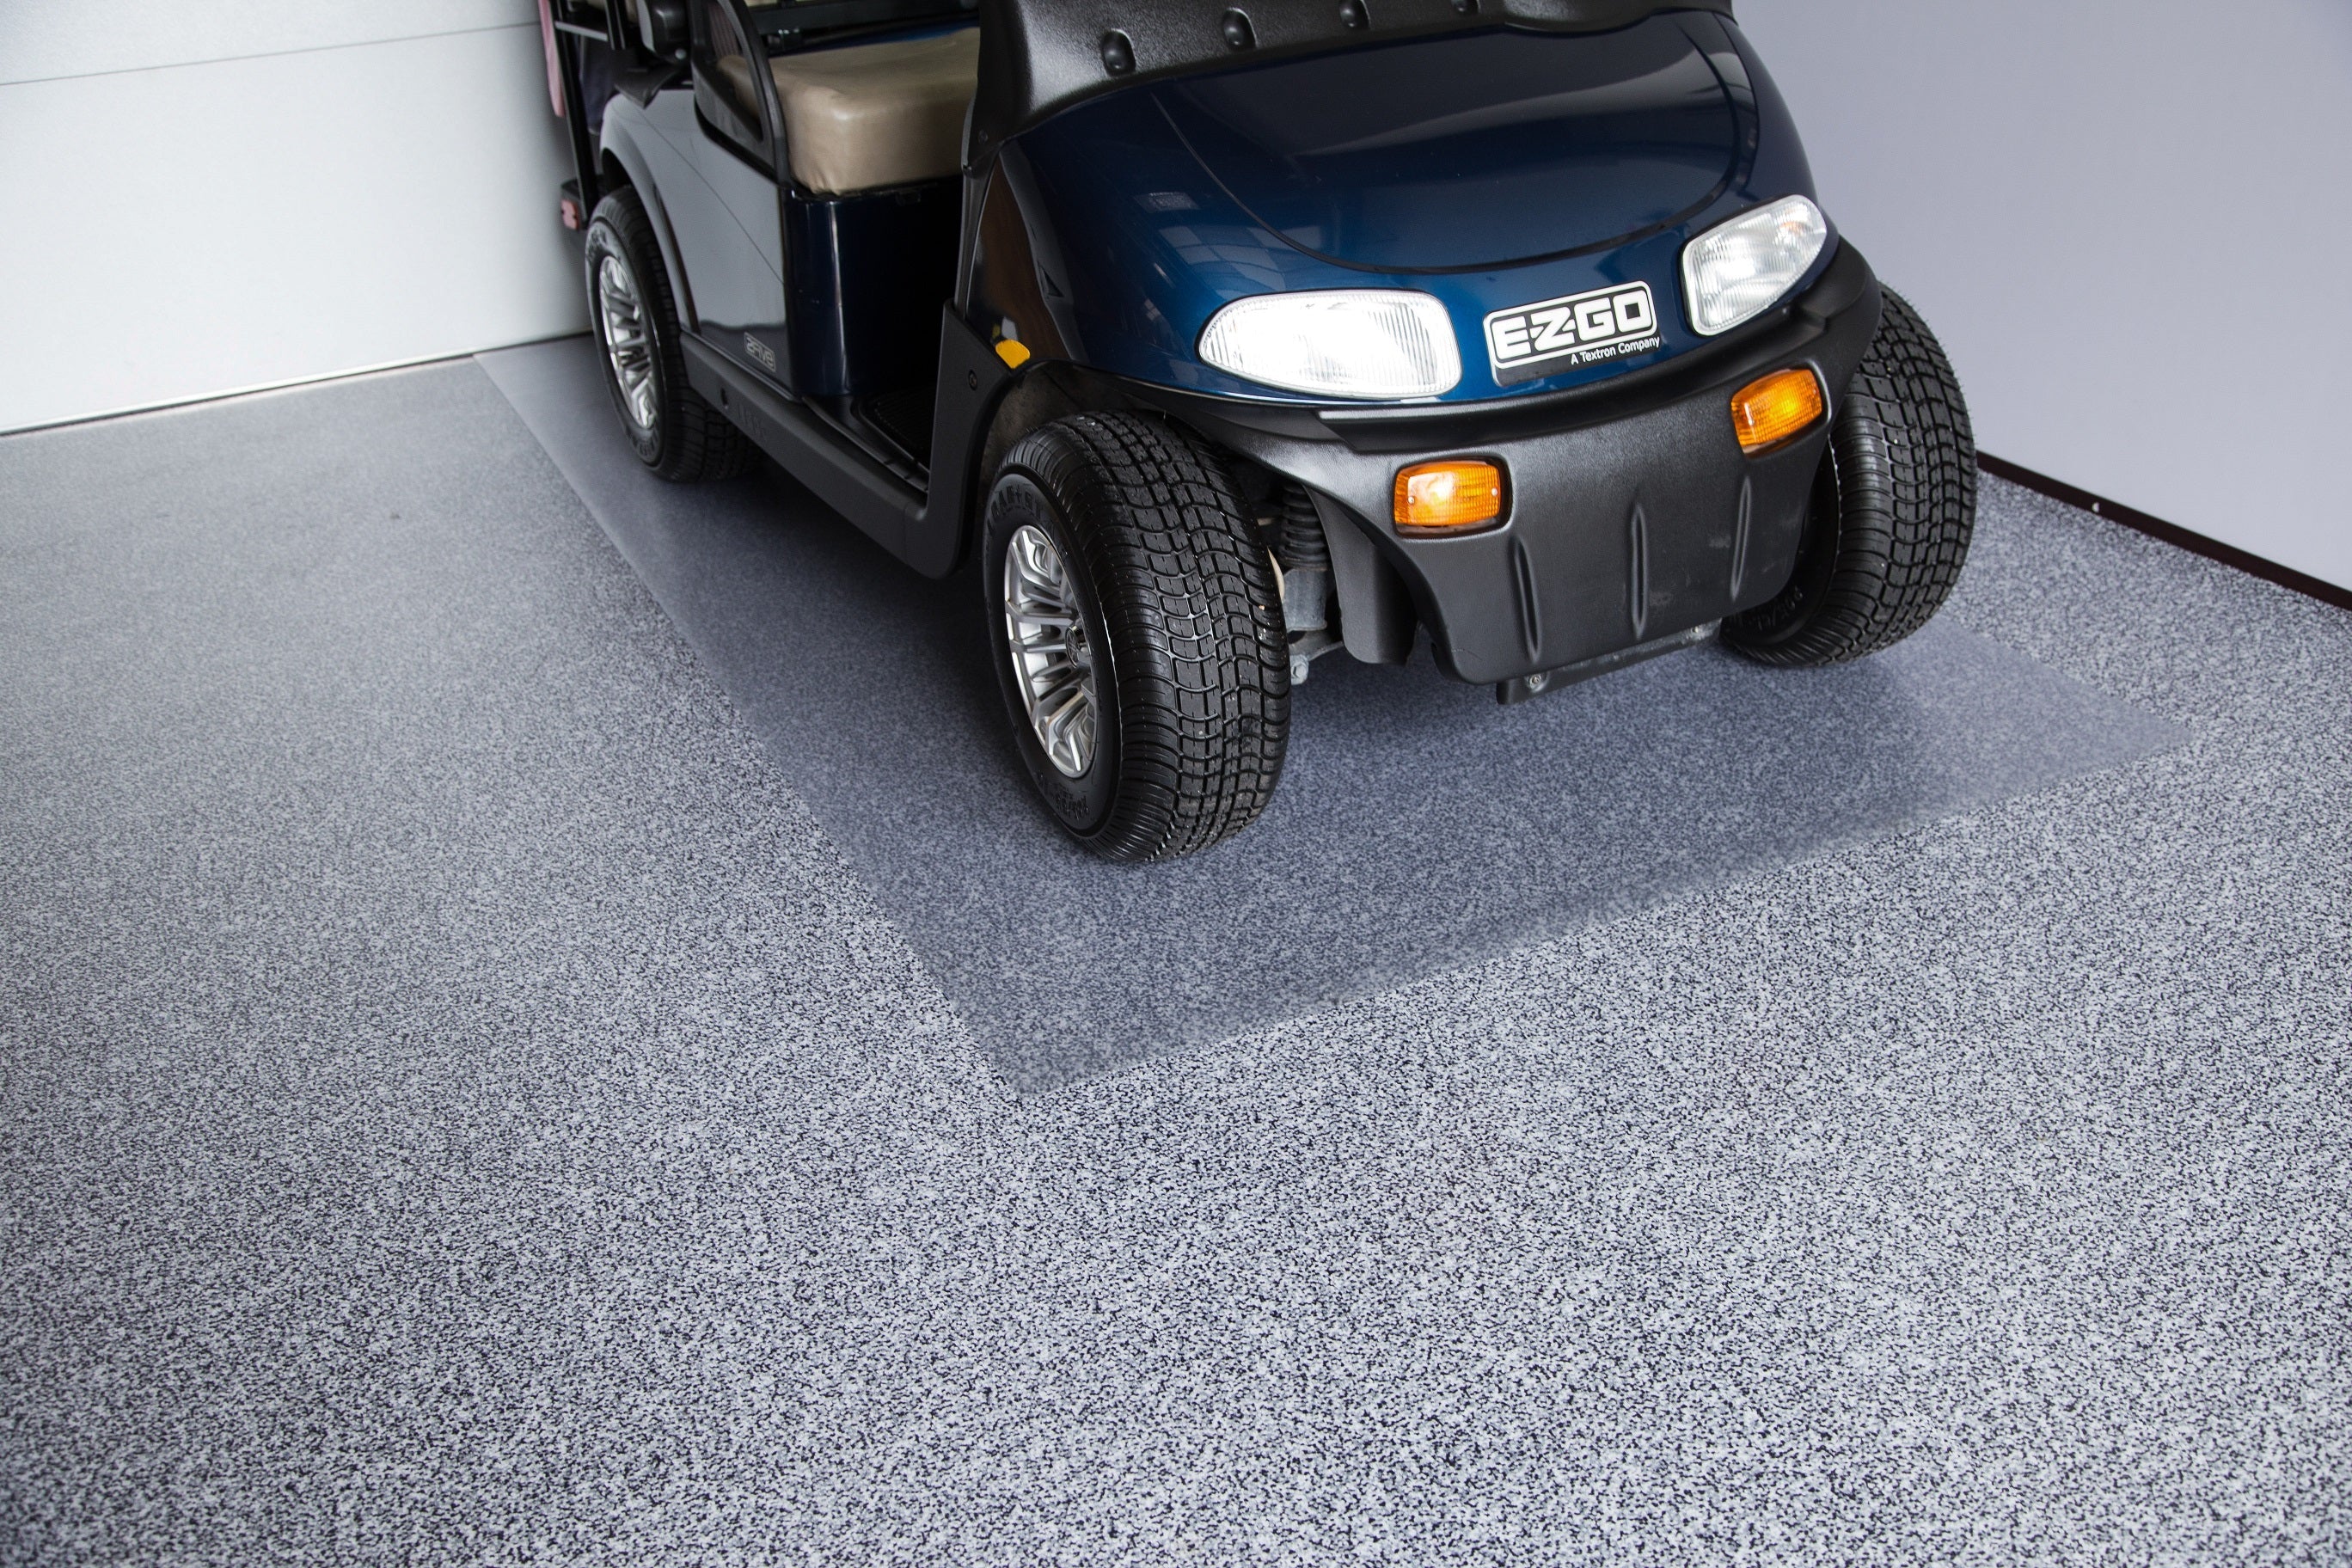 G-Floorл CLEAR Golf Cart Floor Protector Mat  Ceramic 5'x10' - Clear High Gloss Top Coat GF50CT510CCSCGLF